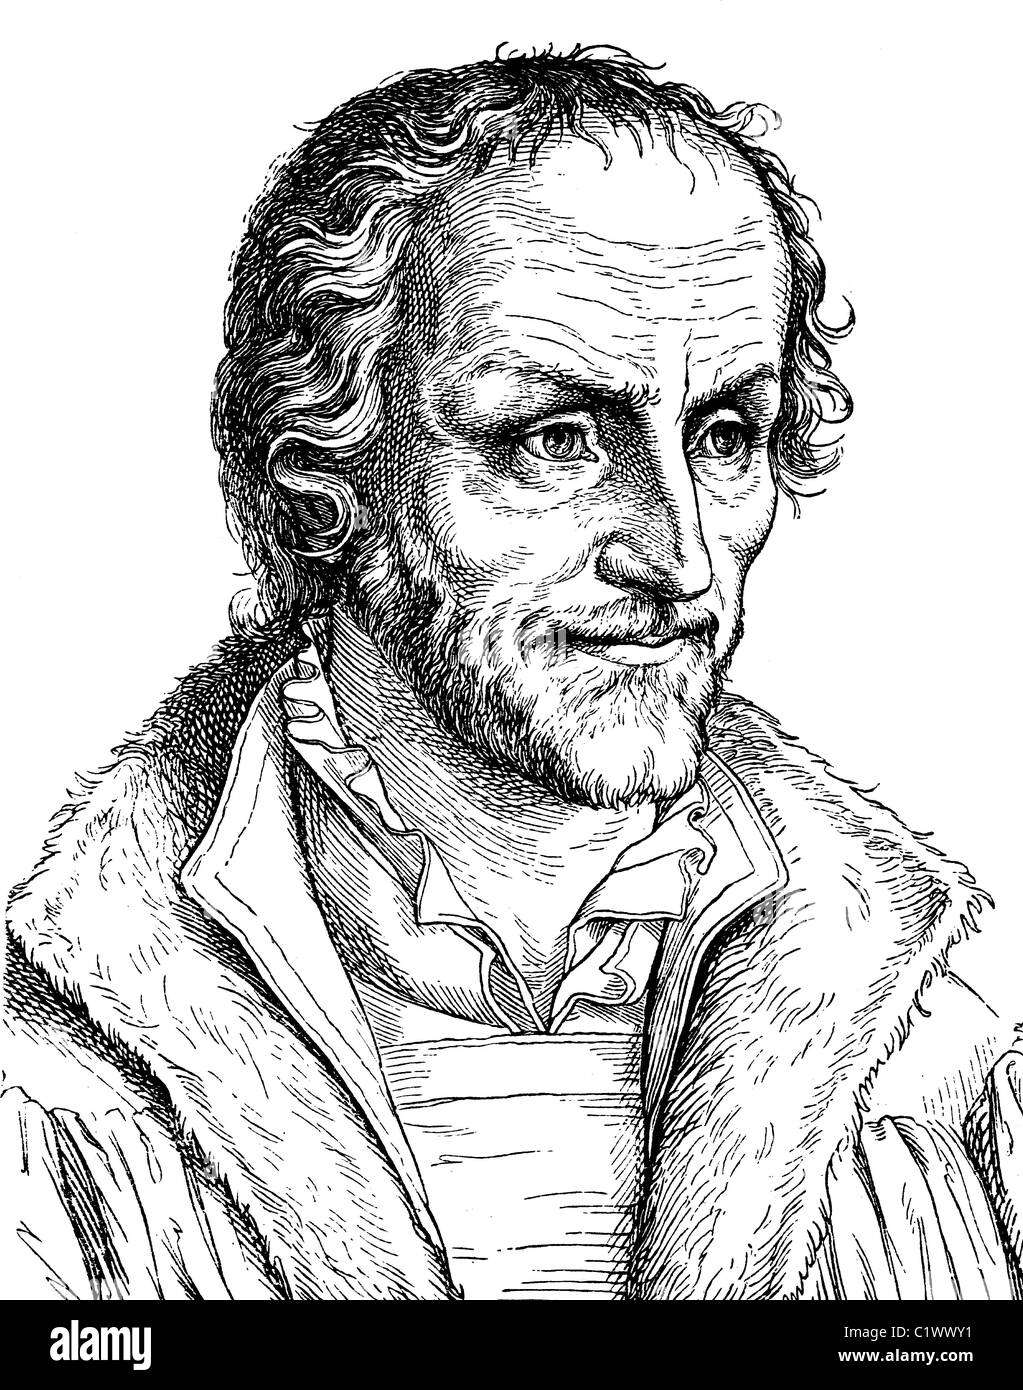 Digital improved image of Philipp Melanchthon, textbook author, poet, reformer, 1497 - 1560, historical illustration, portrait, Stock Photo